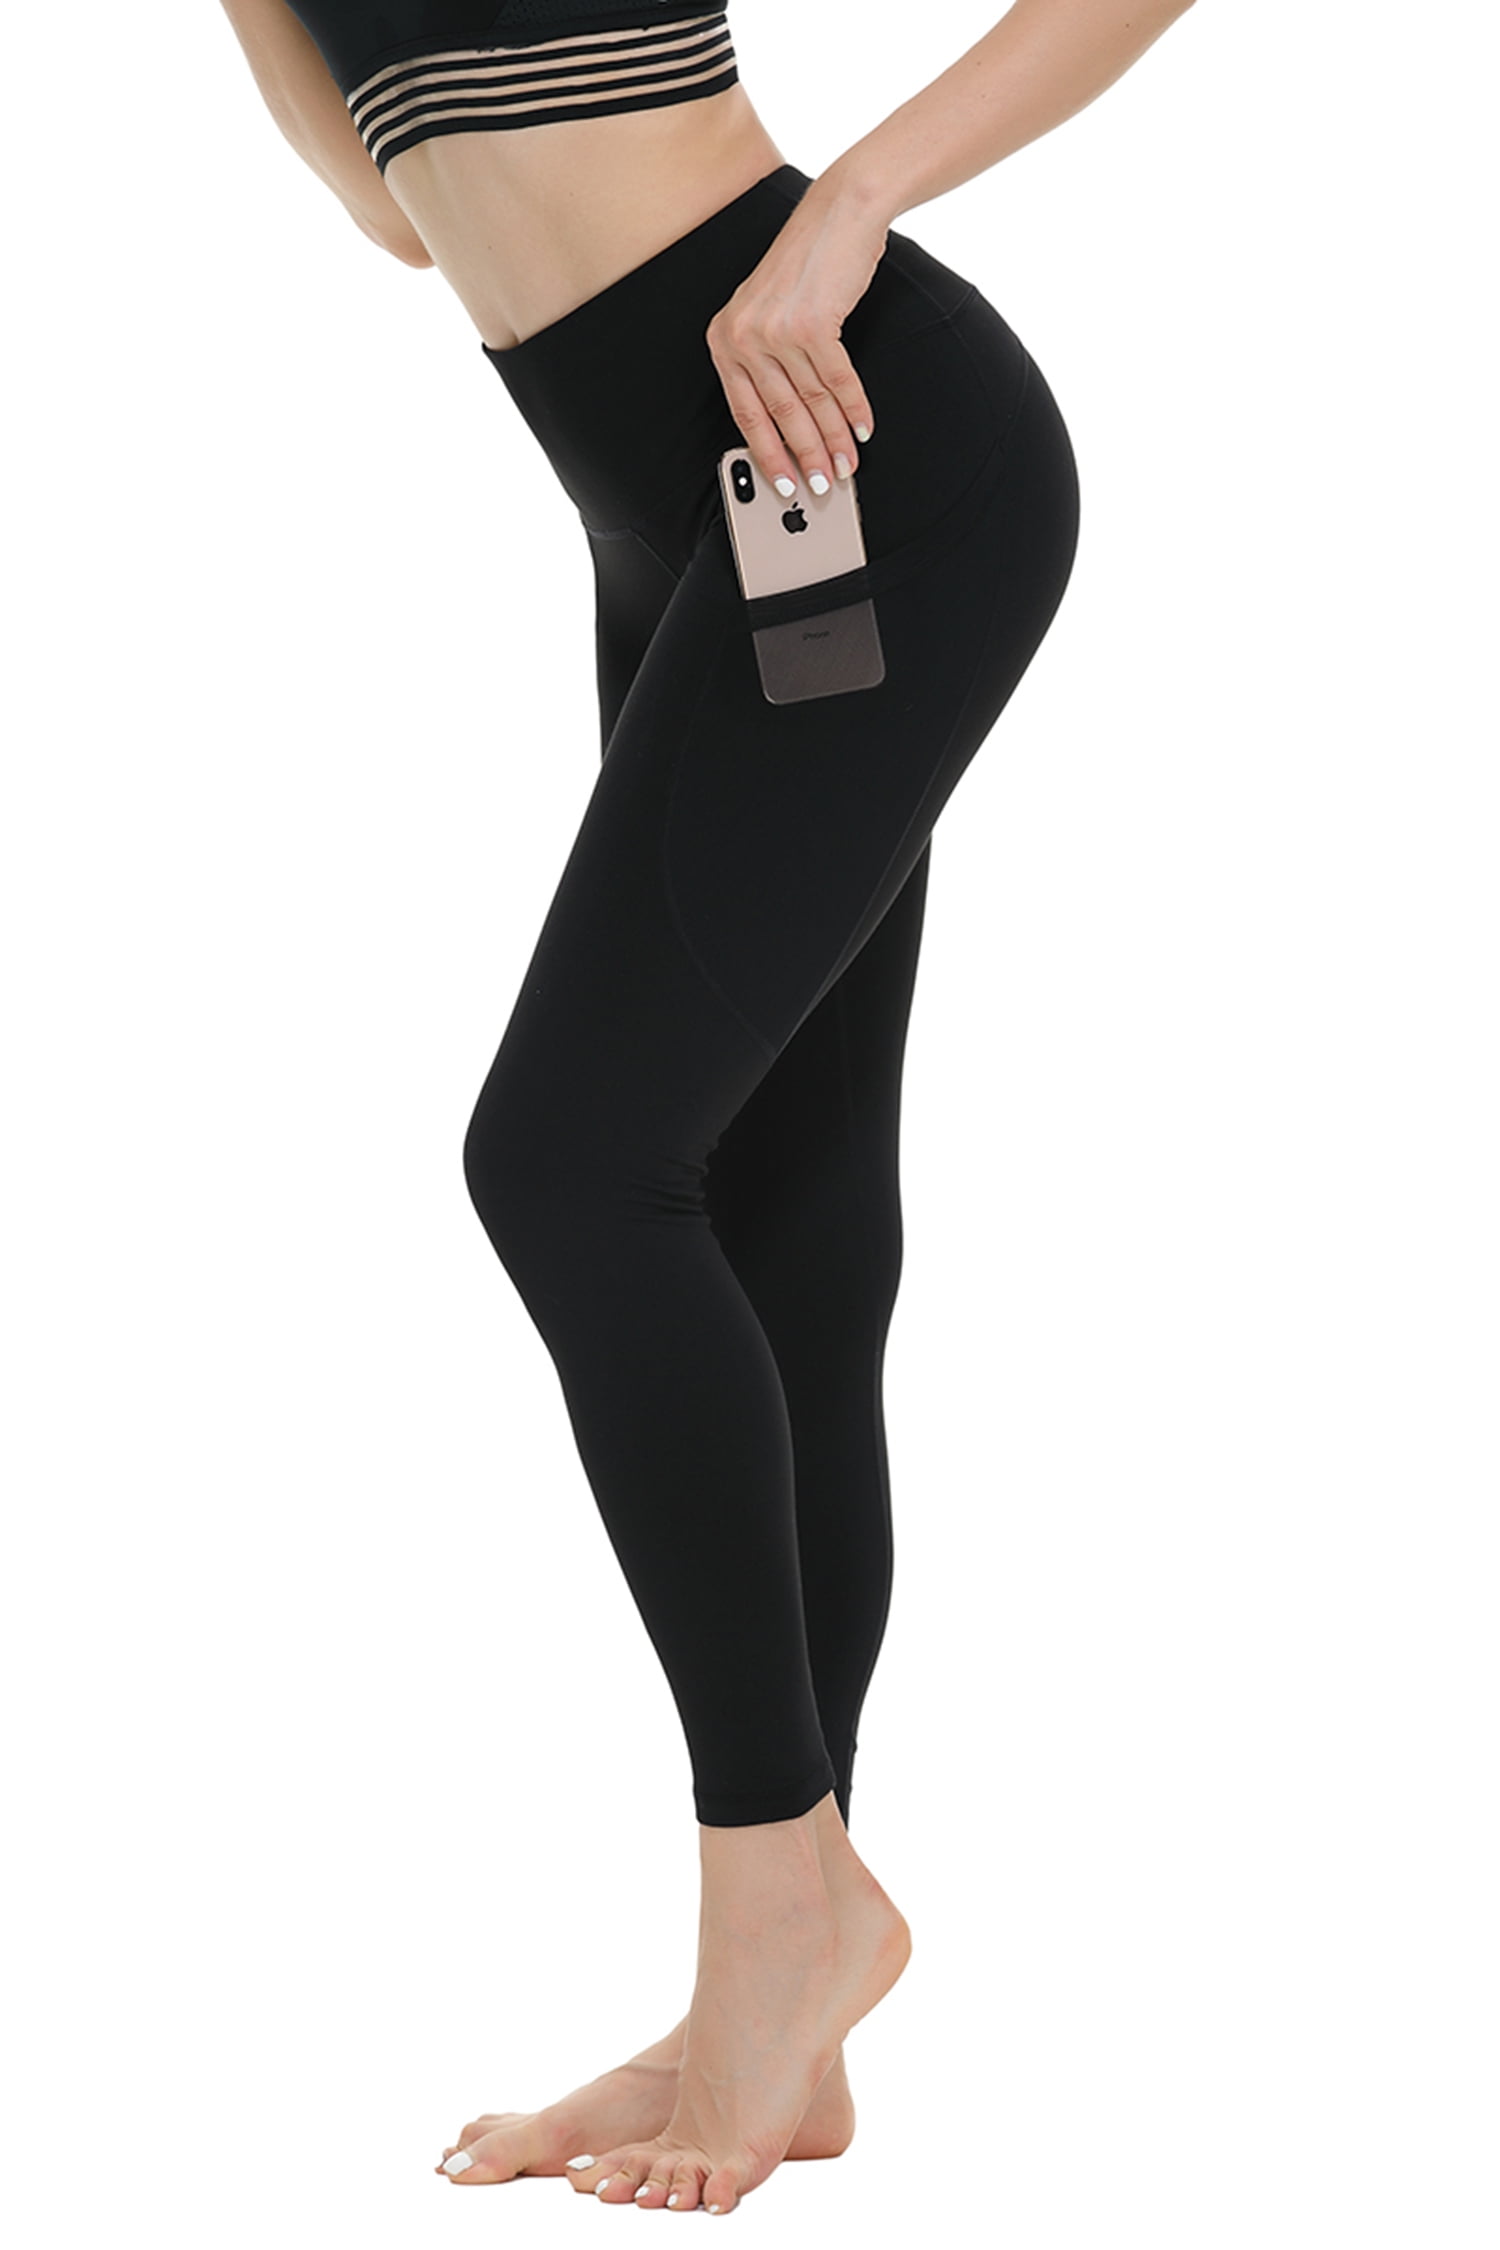 KUTAPU Workout Leggings for Women High Waisted Leggings 7/8 Length Soft Yoga Pants with Pockets 